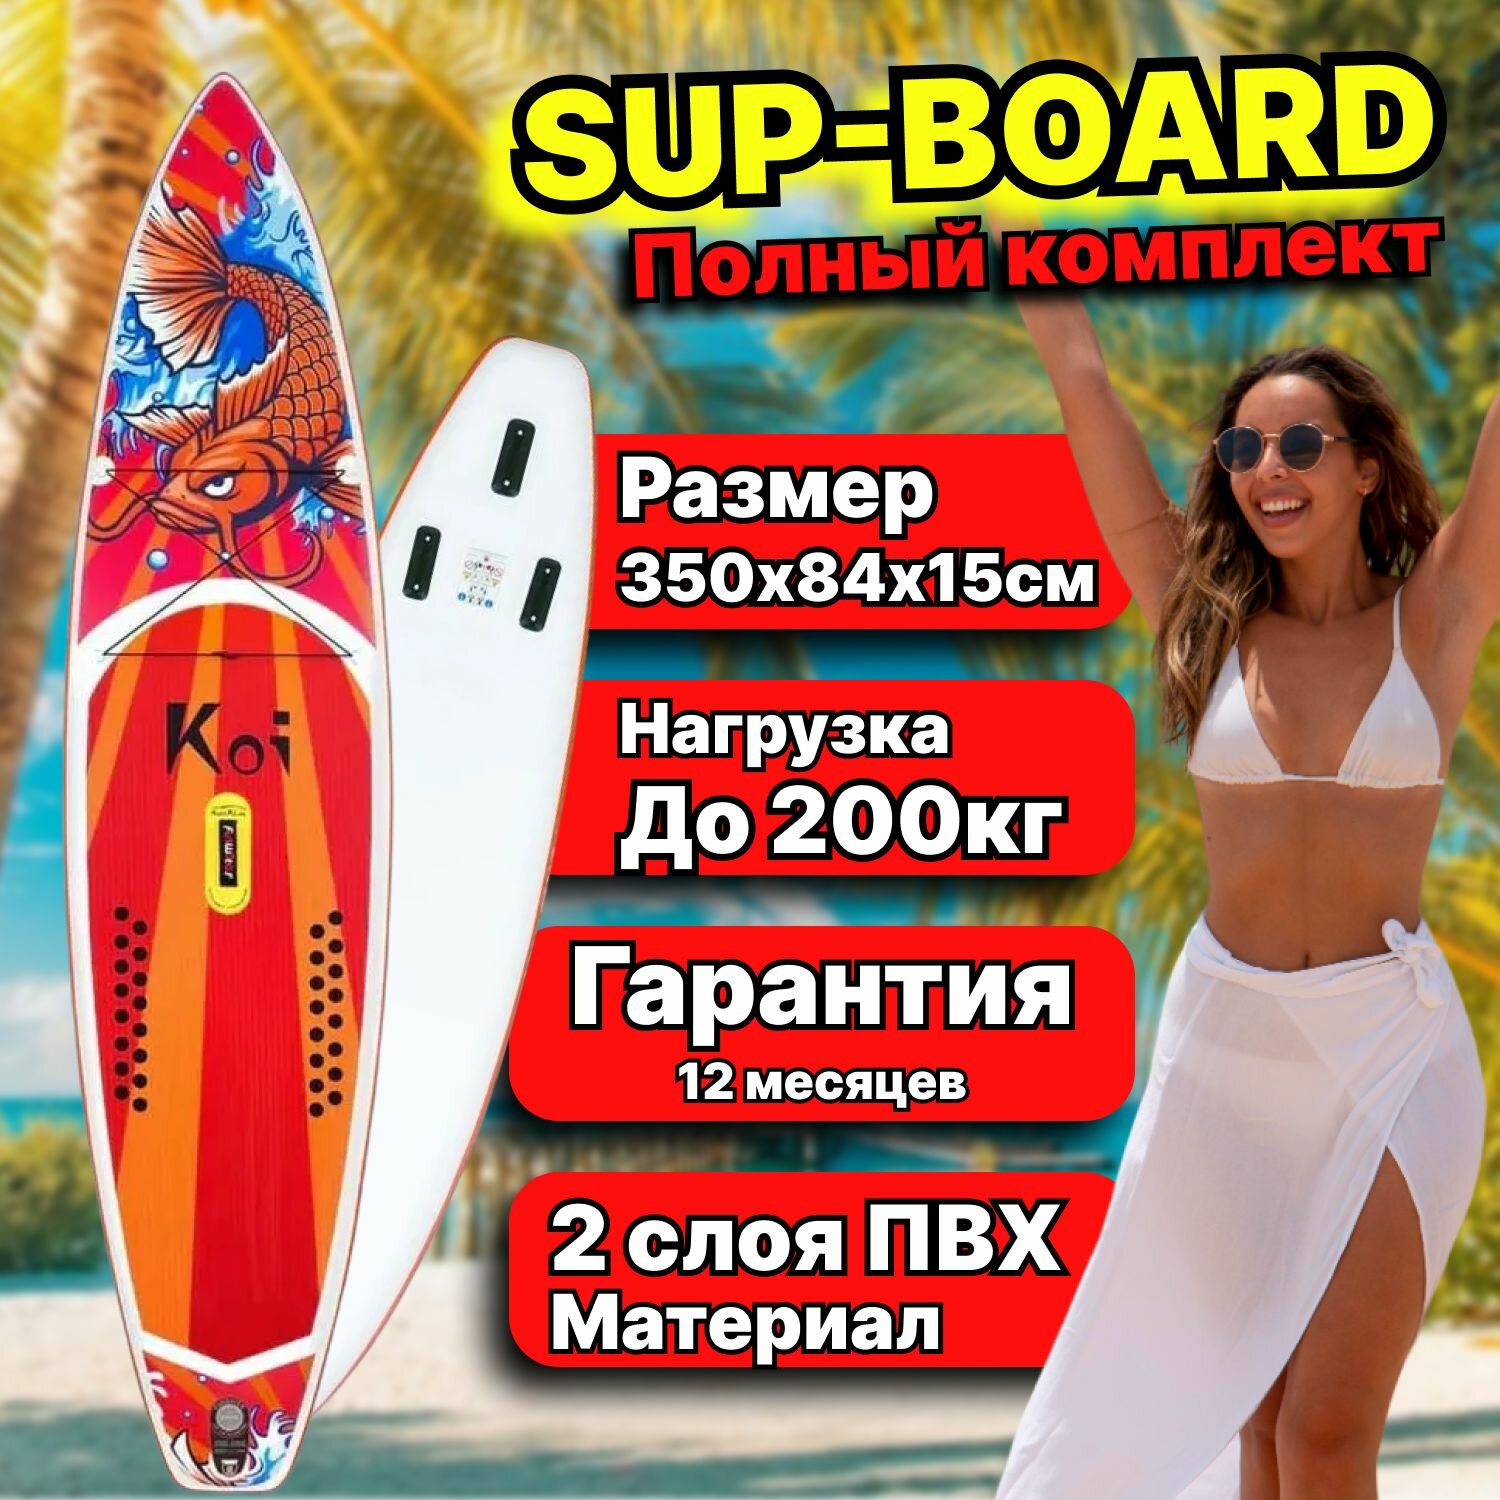 SUP board / сап борд / надувная доска funwater KOI 350cm полный комплект